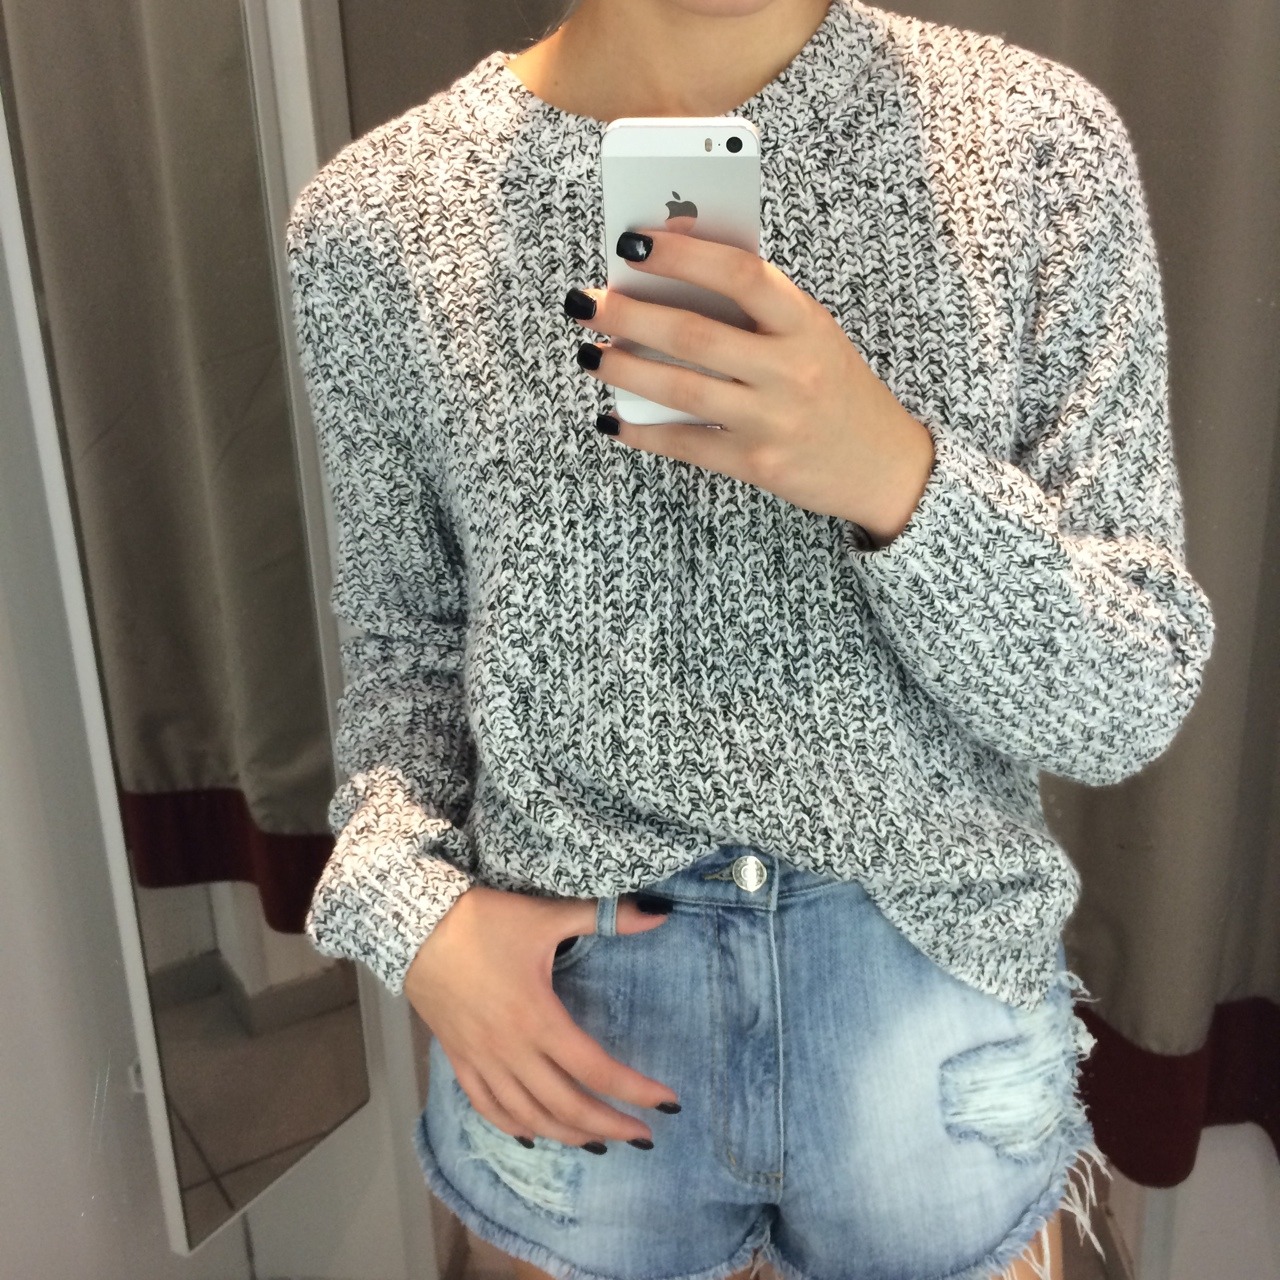 cutest sweater 💕 - ¯\_(ツ)_/¯